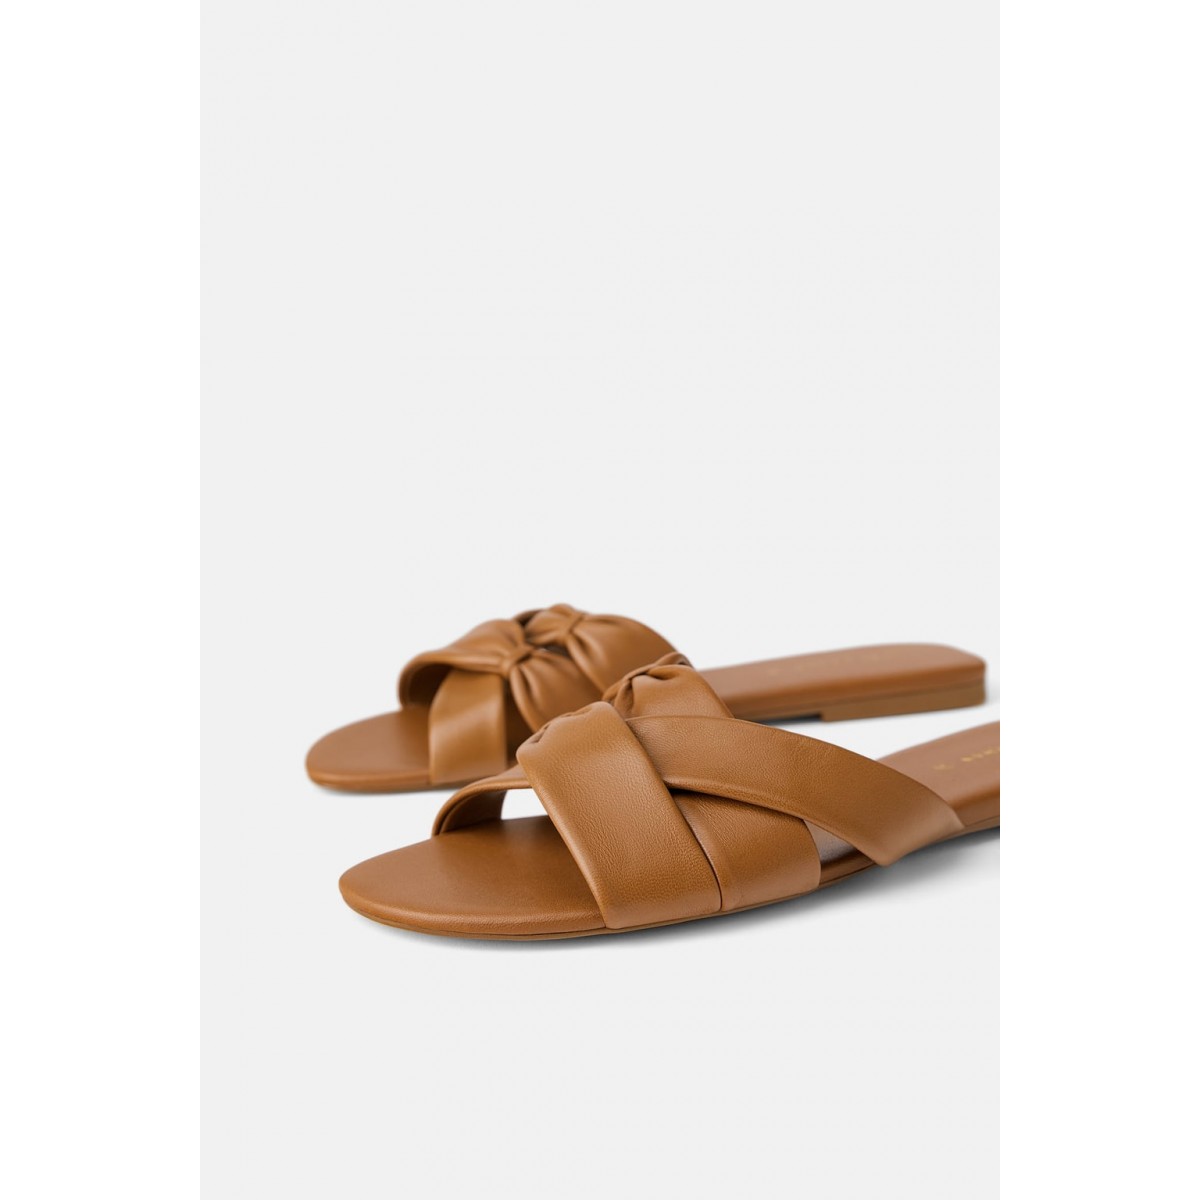 Zara Flat Leather Sandals With CrissCross